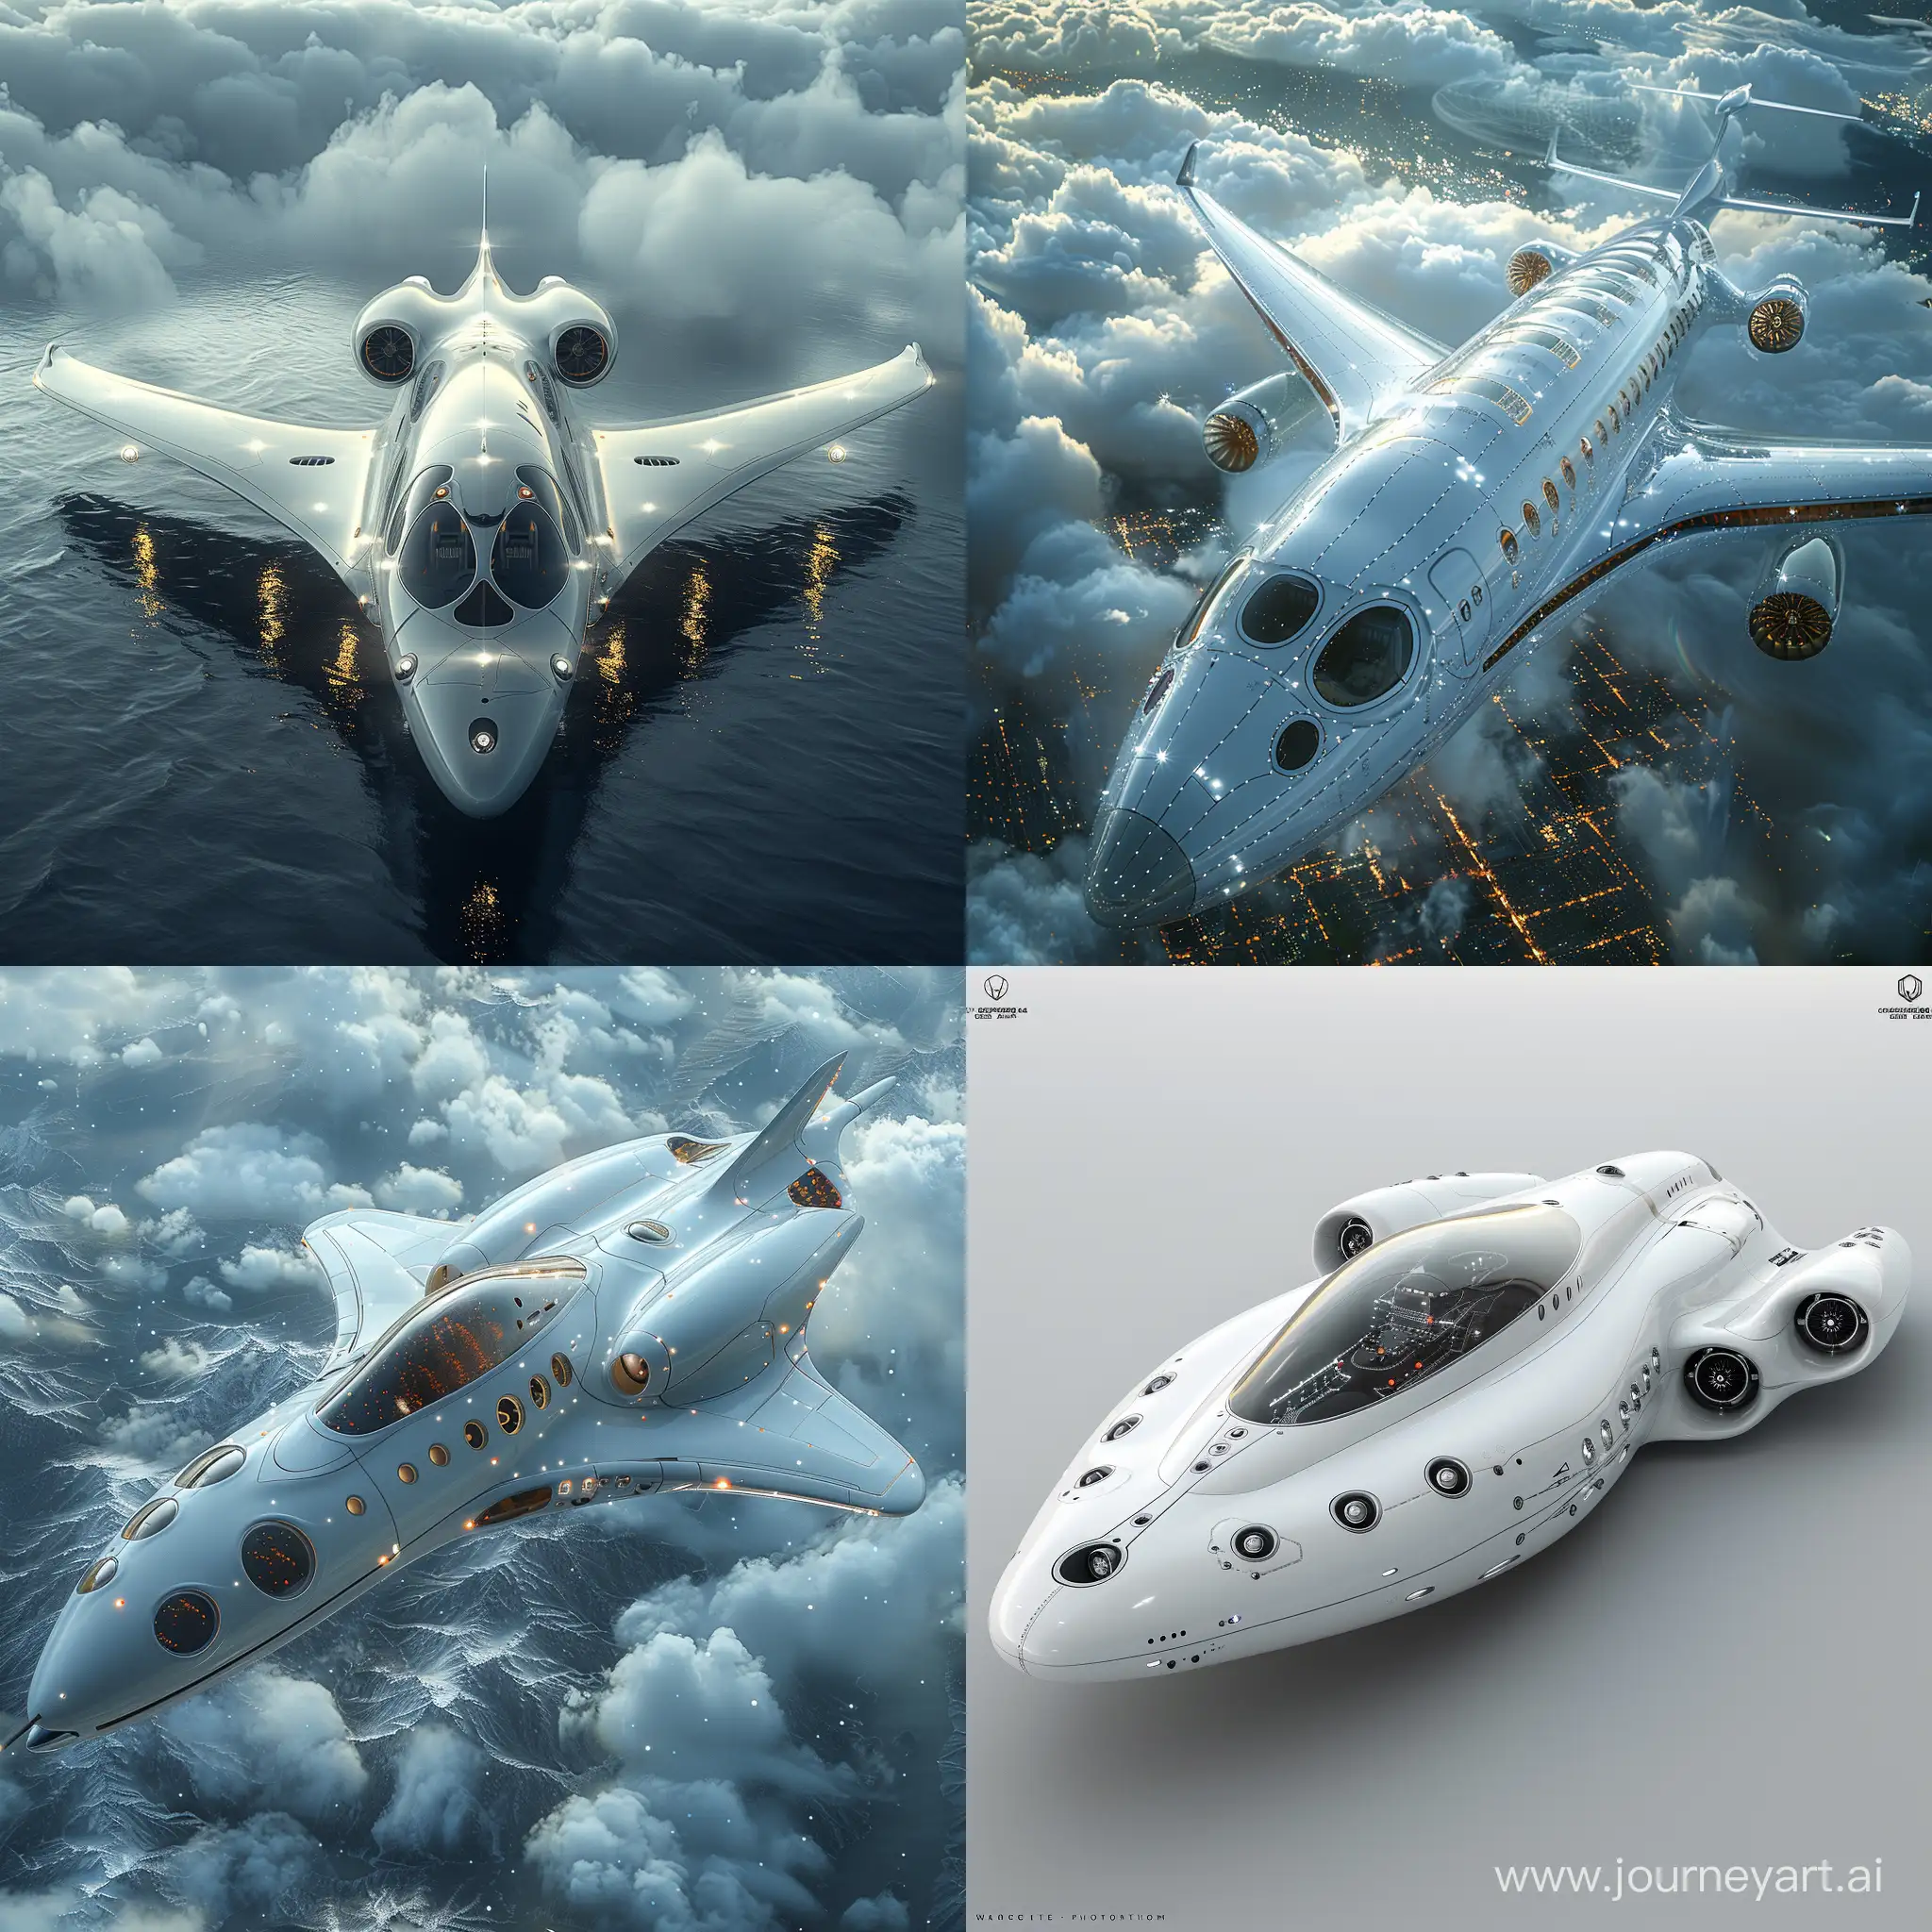 Futuristic sci-fi high-tech passenger airplane, heavy-duty composite materials, octane render --stylize 1000